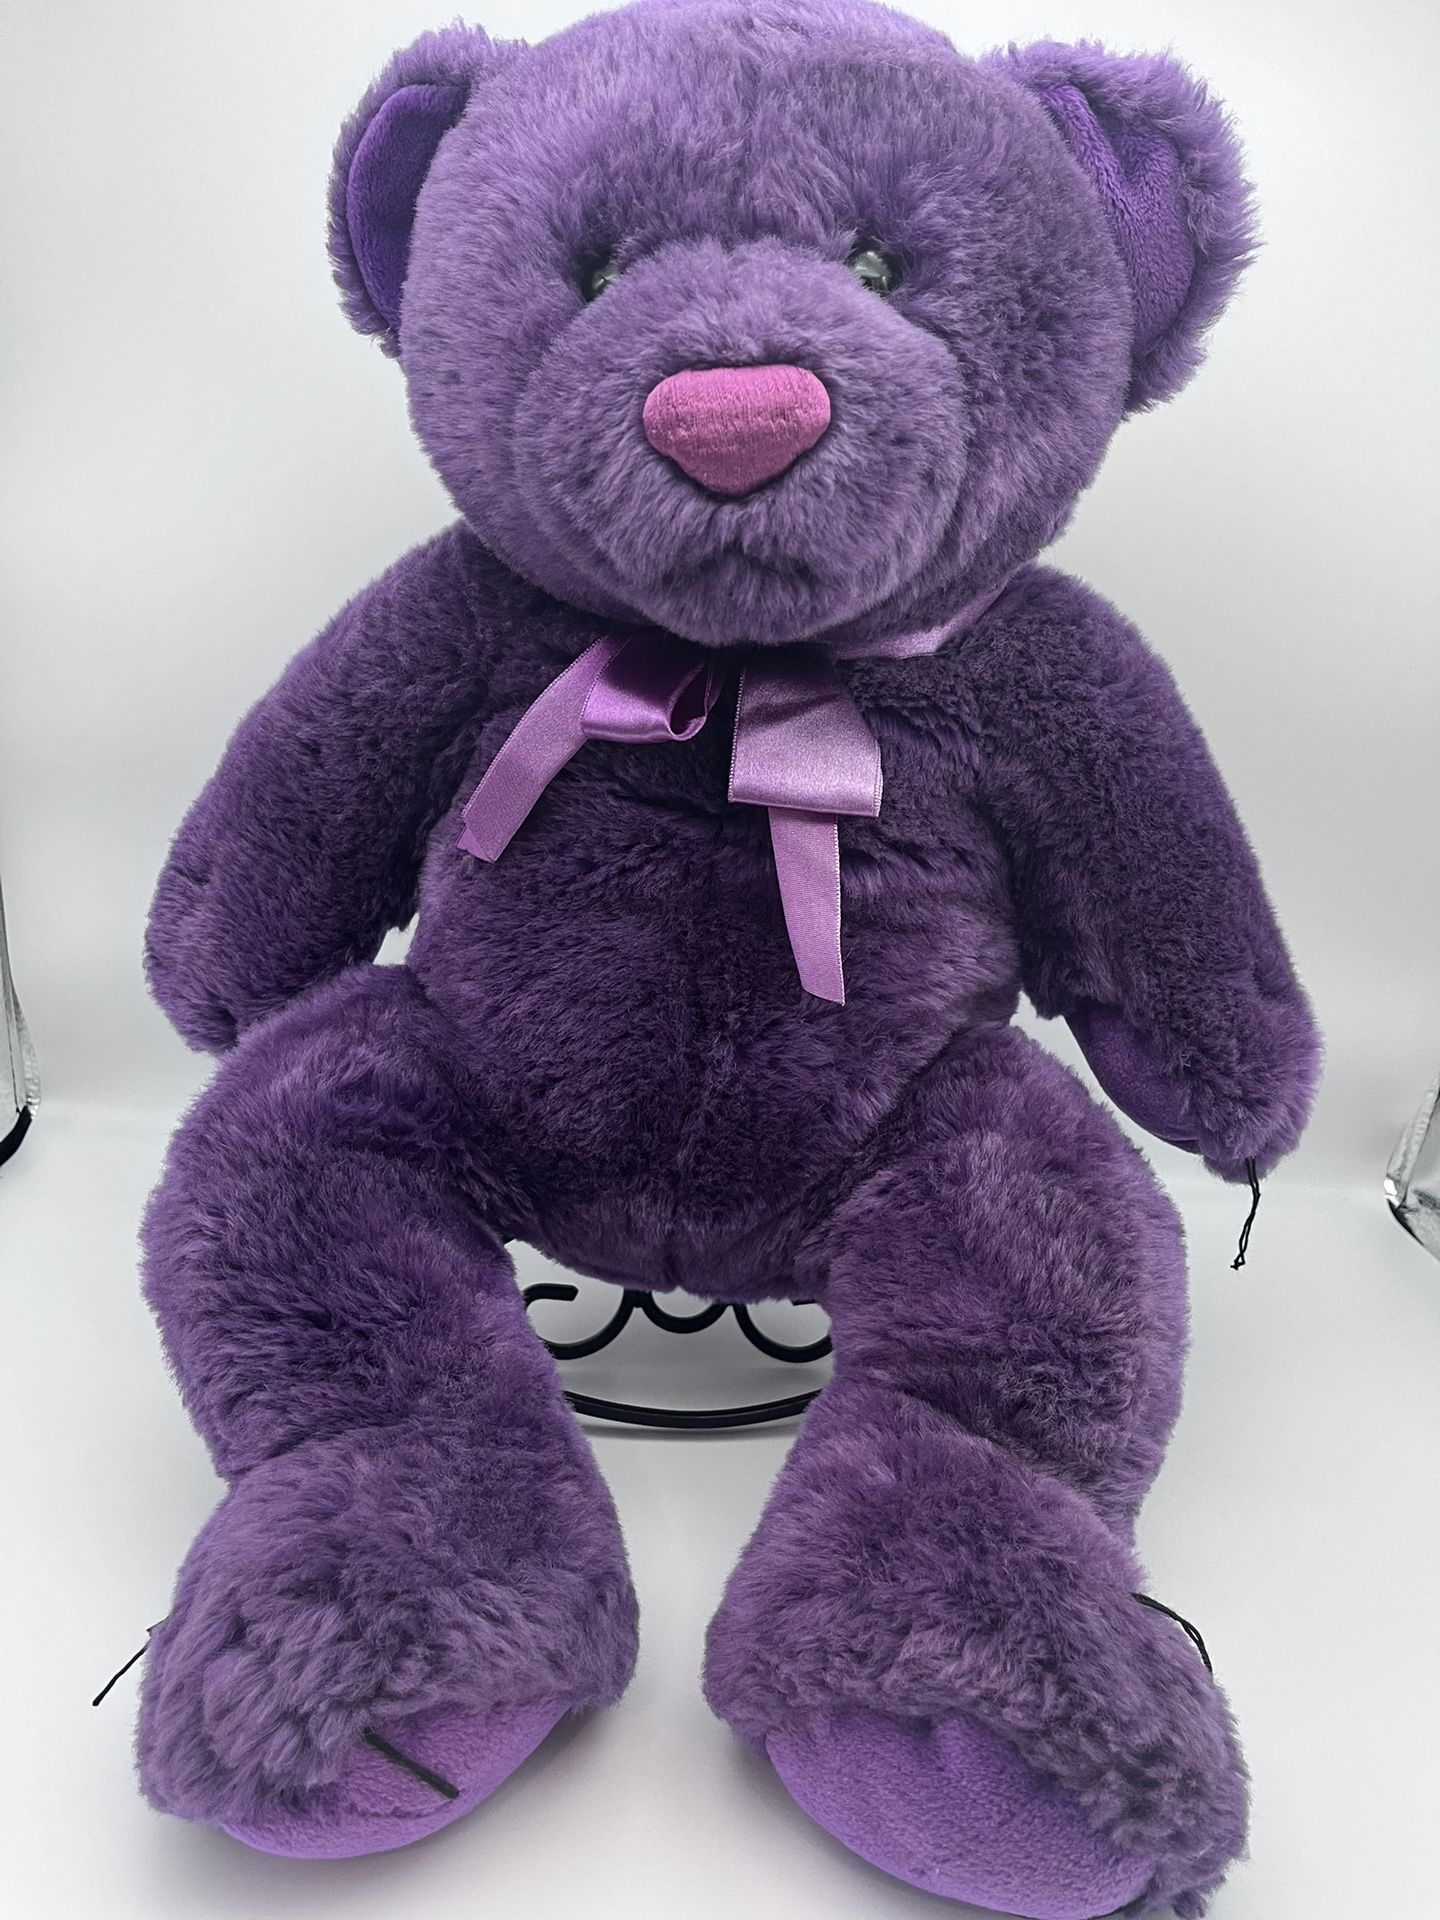 Kids Preferred 17 Inch Perfect Plush Purple Stuffed Animal Teddy Bear